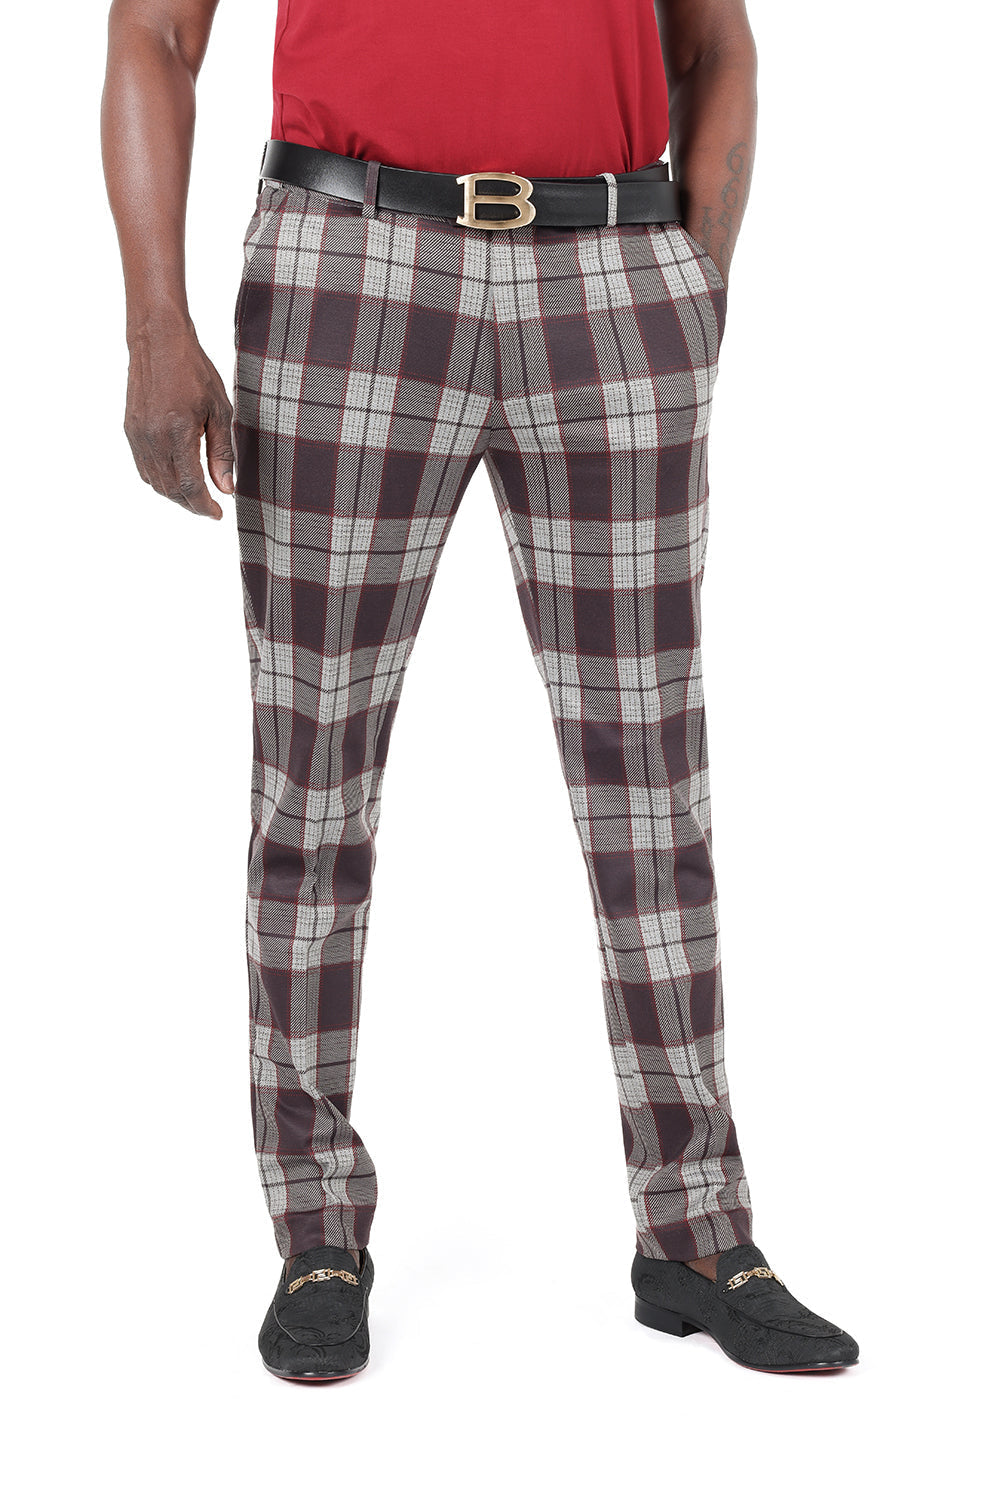 Barabas Men's Printed Checkered Design Brown Chino Pants CP183 Brown